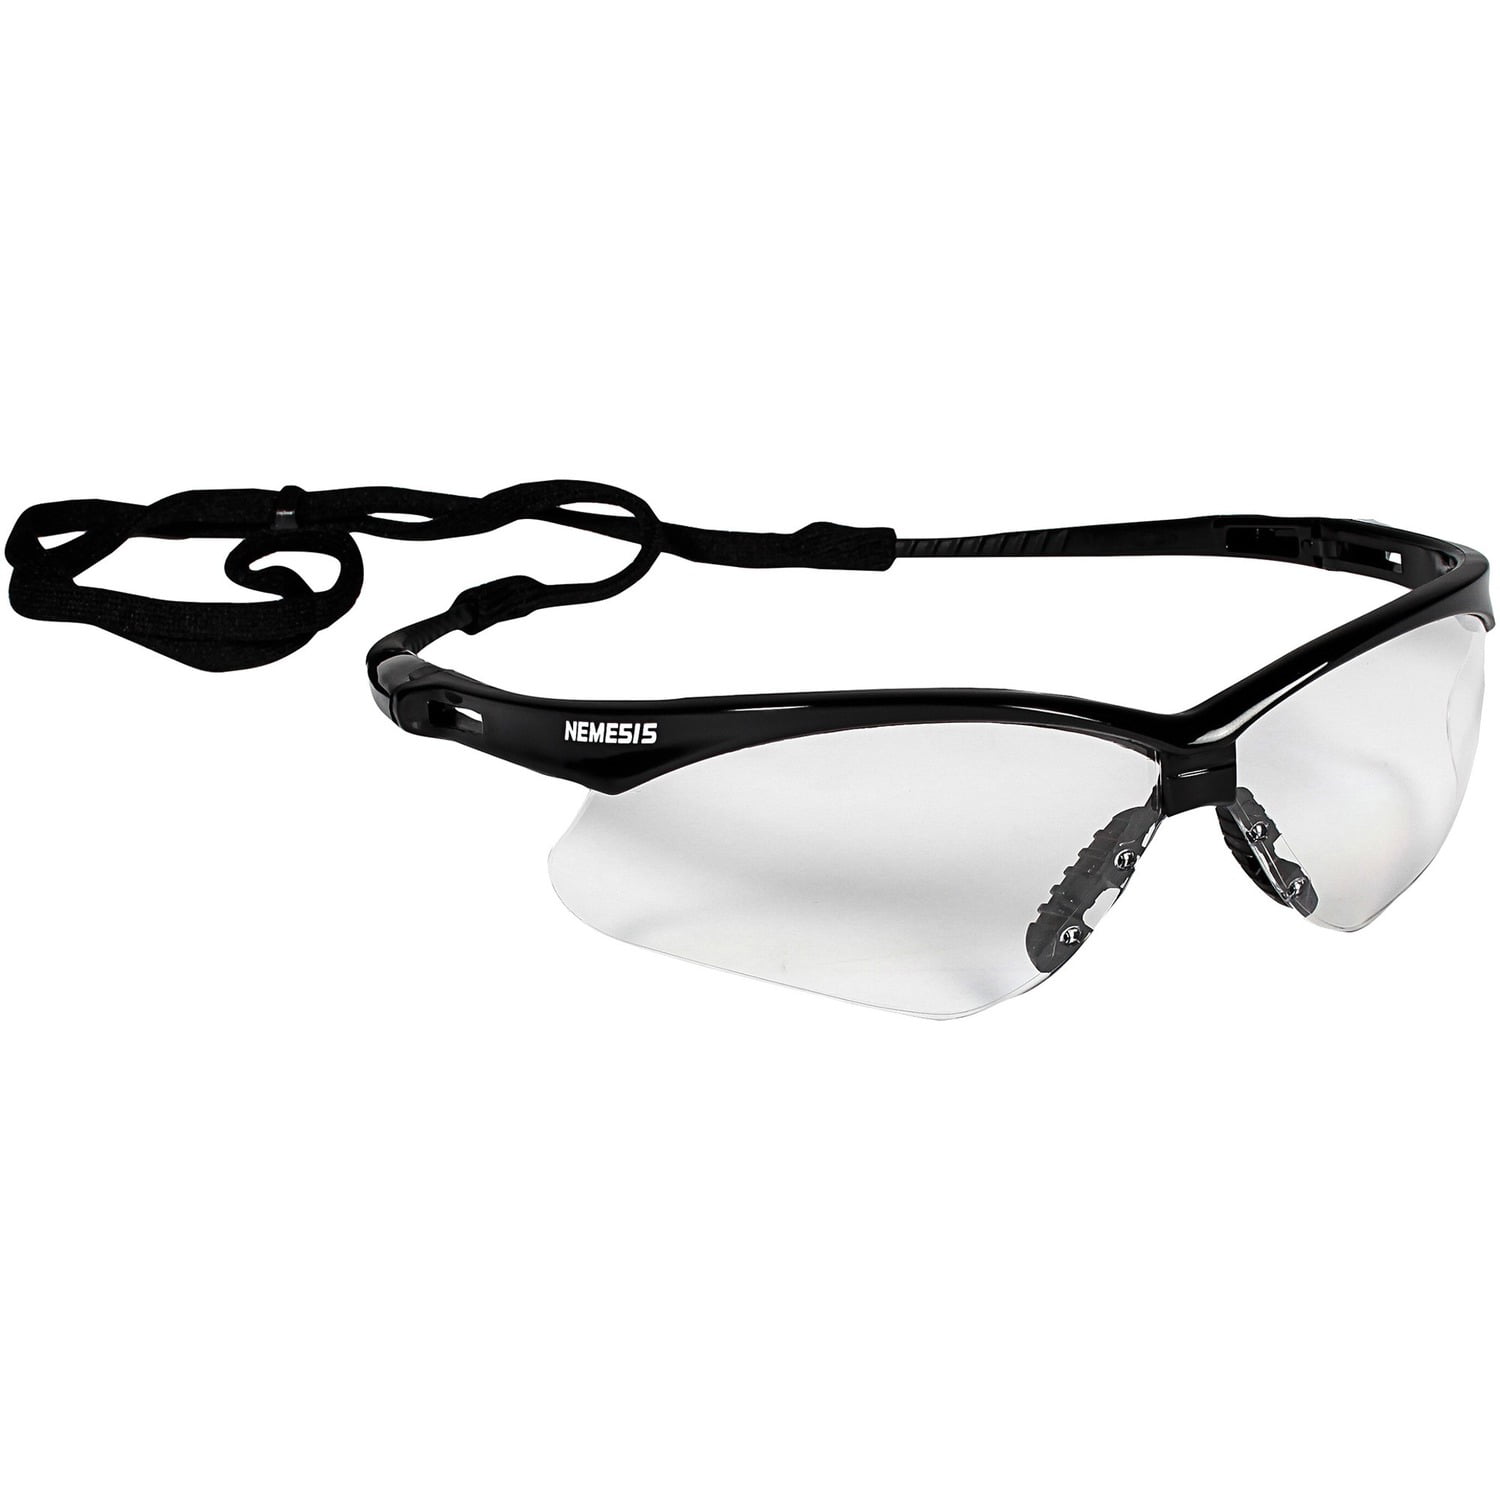 Kimberly-Clark Safety Eyewear Jackson V30 Nemesis W/ Neck Cord 12/CT CL 25679 